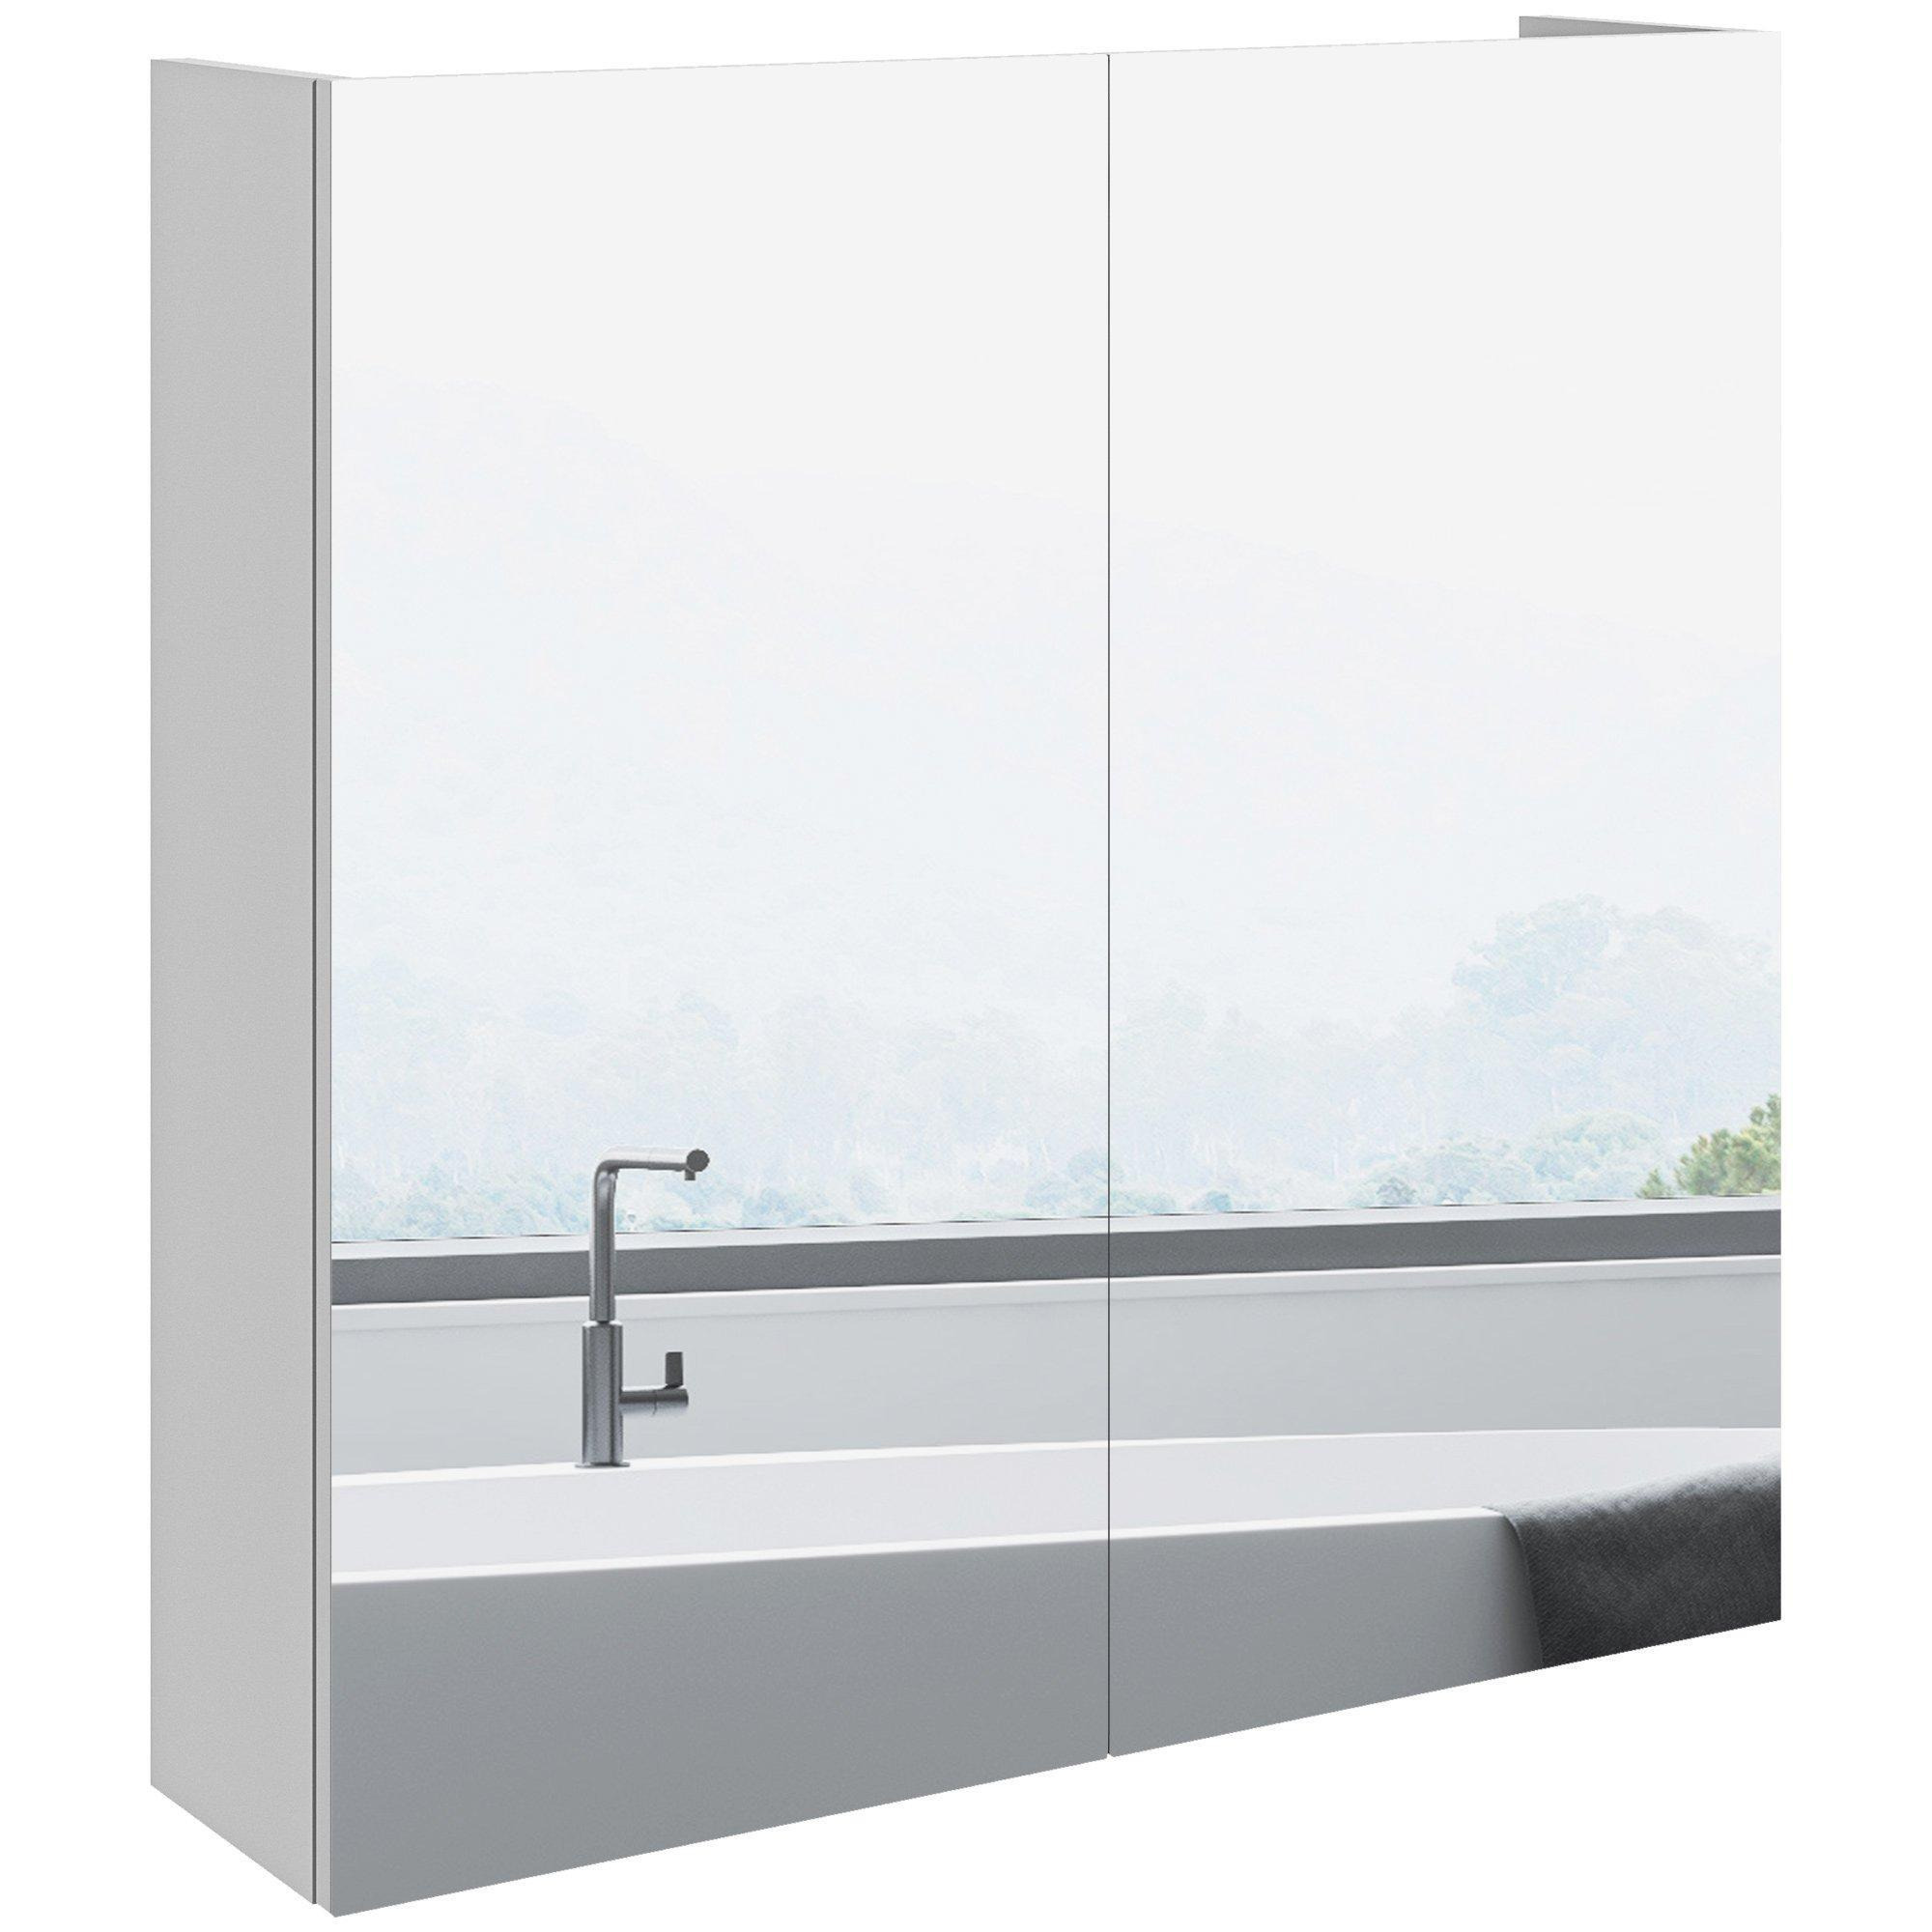 Bathroom Mirror Cabinet with Adjustable Shelf 60W x 15D x 60Hcm White - image 1